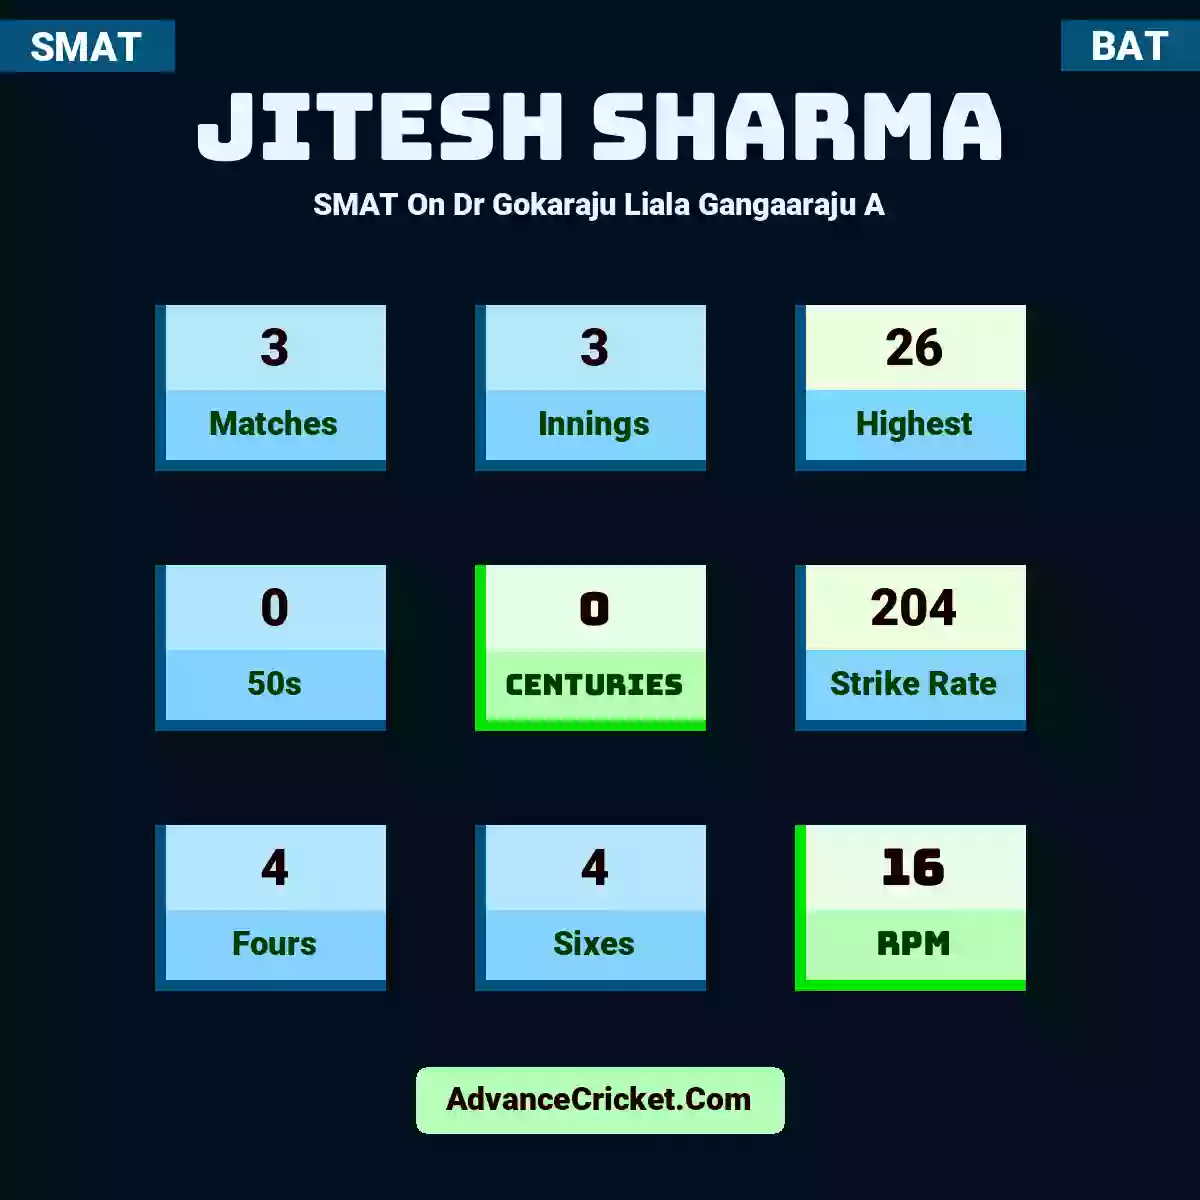 Jitesh Sharma SMAT  On Dr Gokaraju Liala Gangaaraju A, Jitesh Sharma played 3 matches, scored 26 runs as highest, 0 half-centuries, and 0 centuries, with a strike rate of 204. J.Sharma hit 4 fours and 4 sixes, with an RPM of 16.